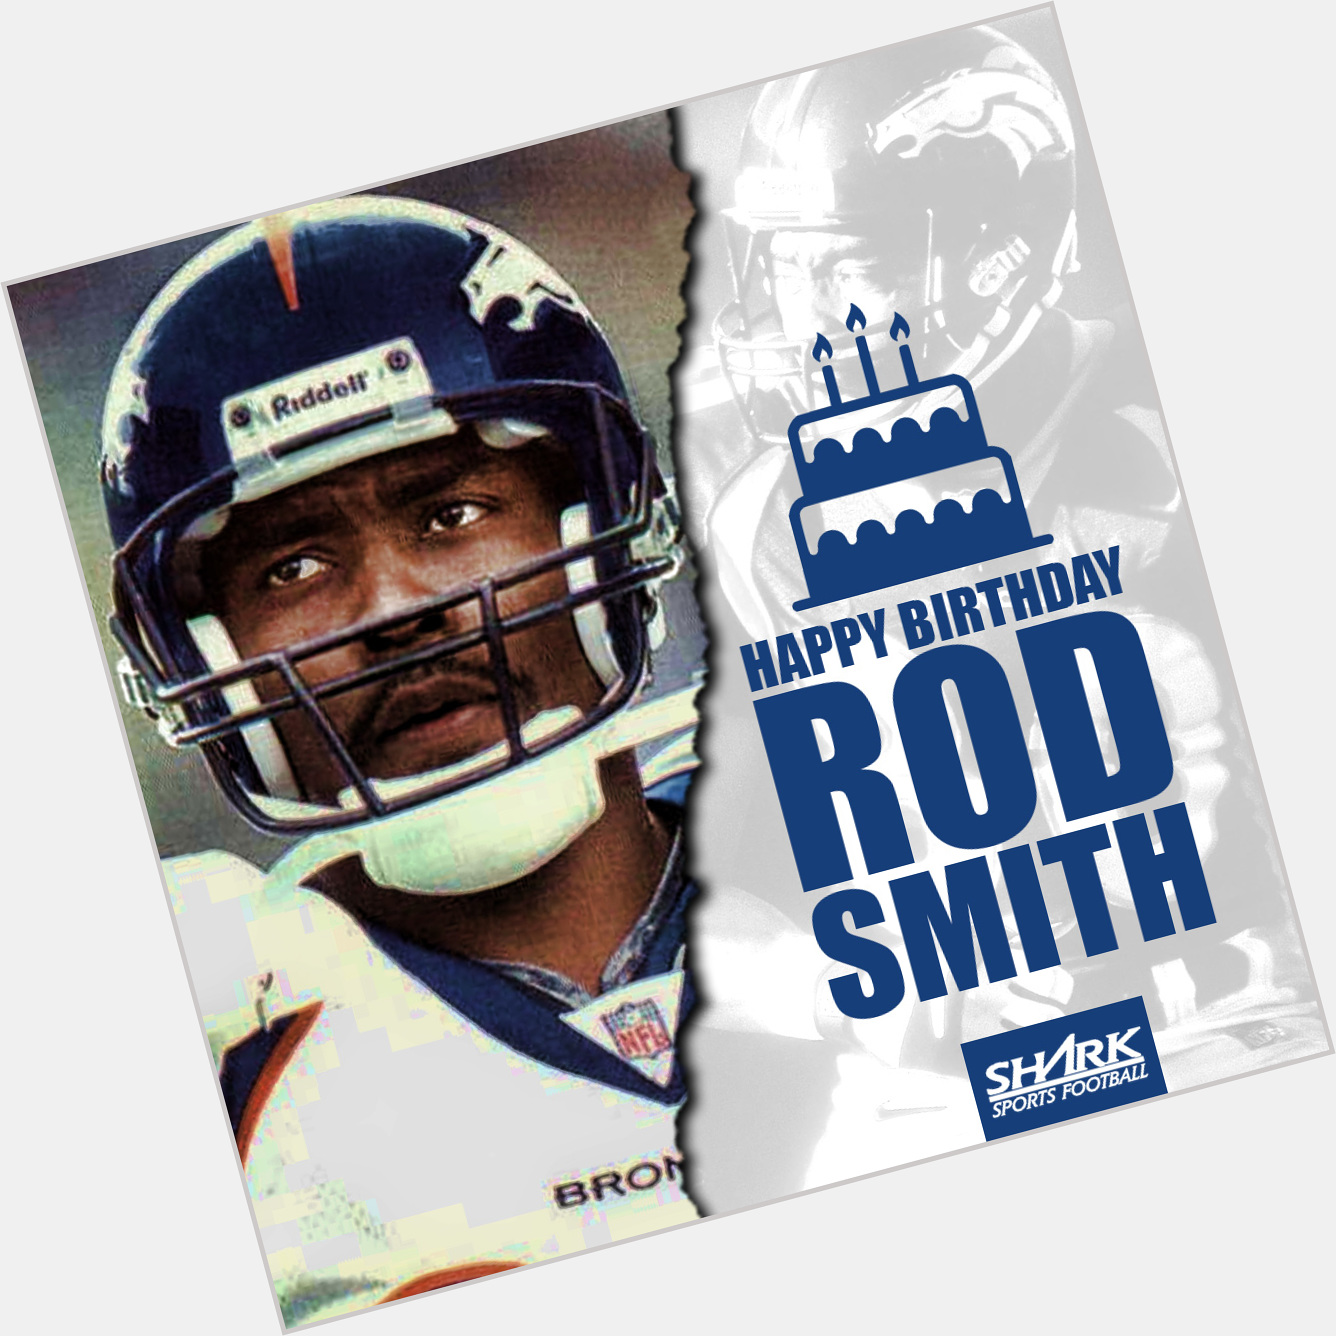 Happy birthday to retired client, Rod Smith (   